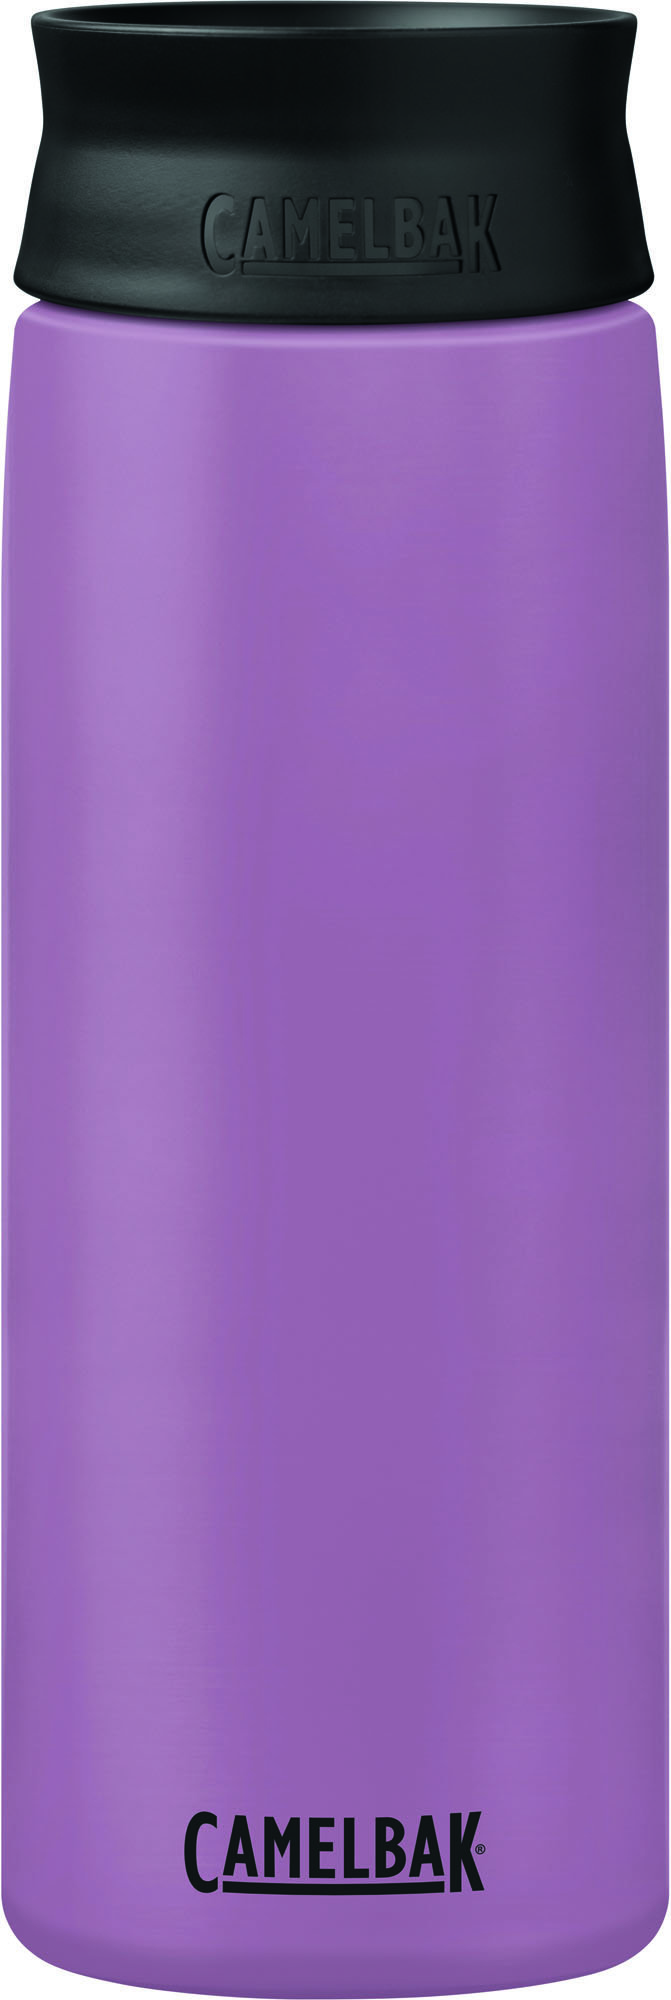 20oz Camelbak Water Bottle Purple Hot Cap Stainless Steel Vacuum Insulated  Iris